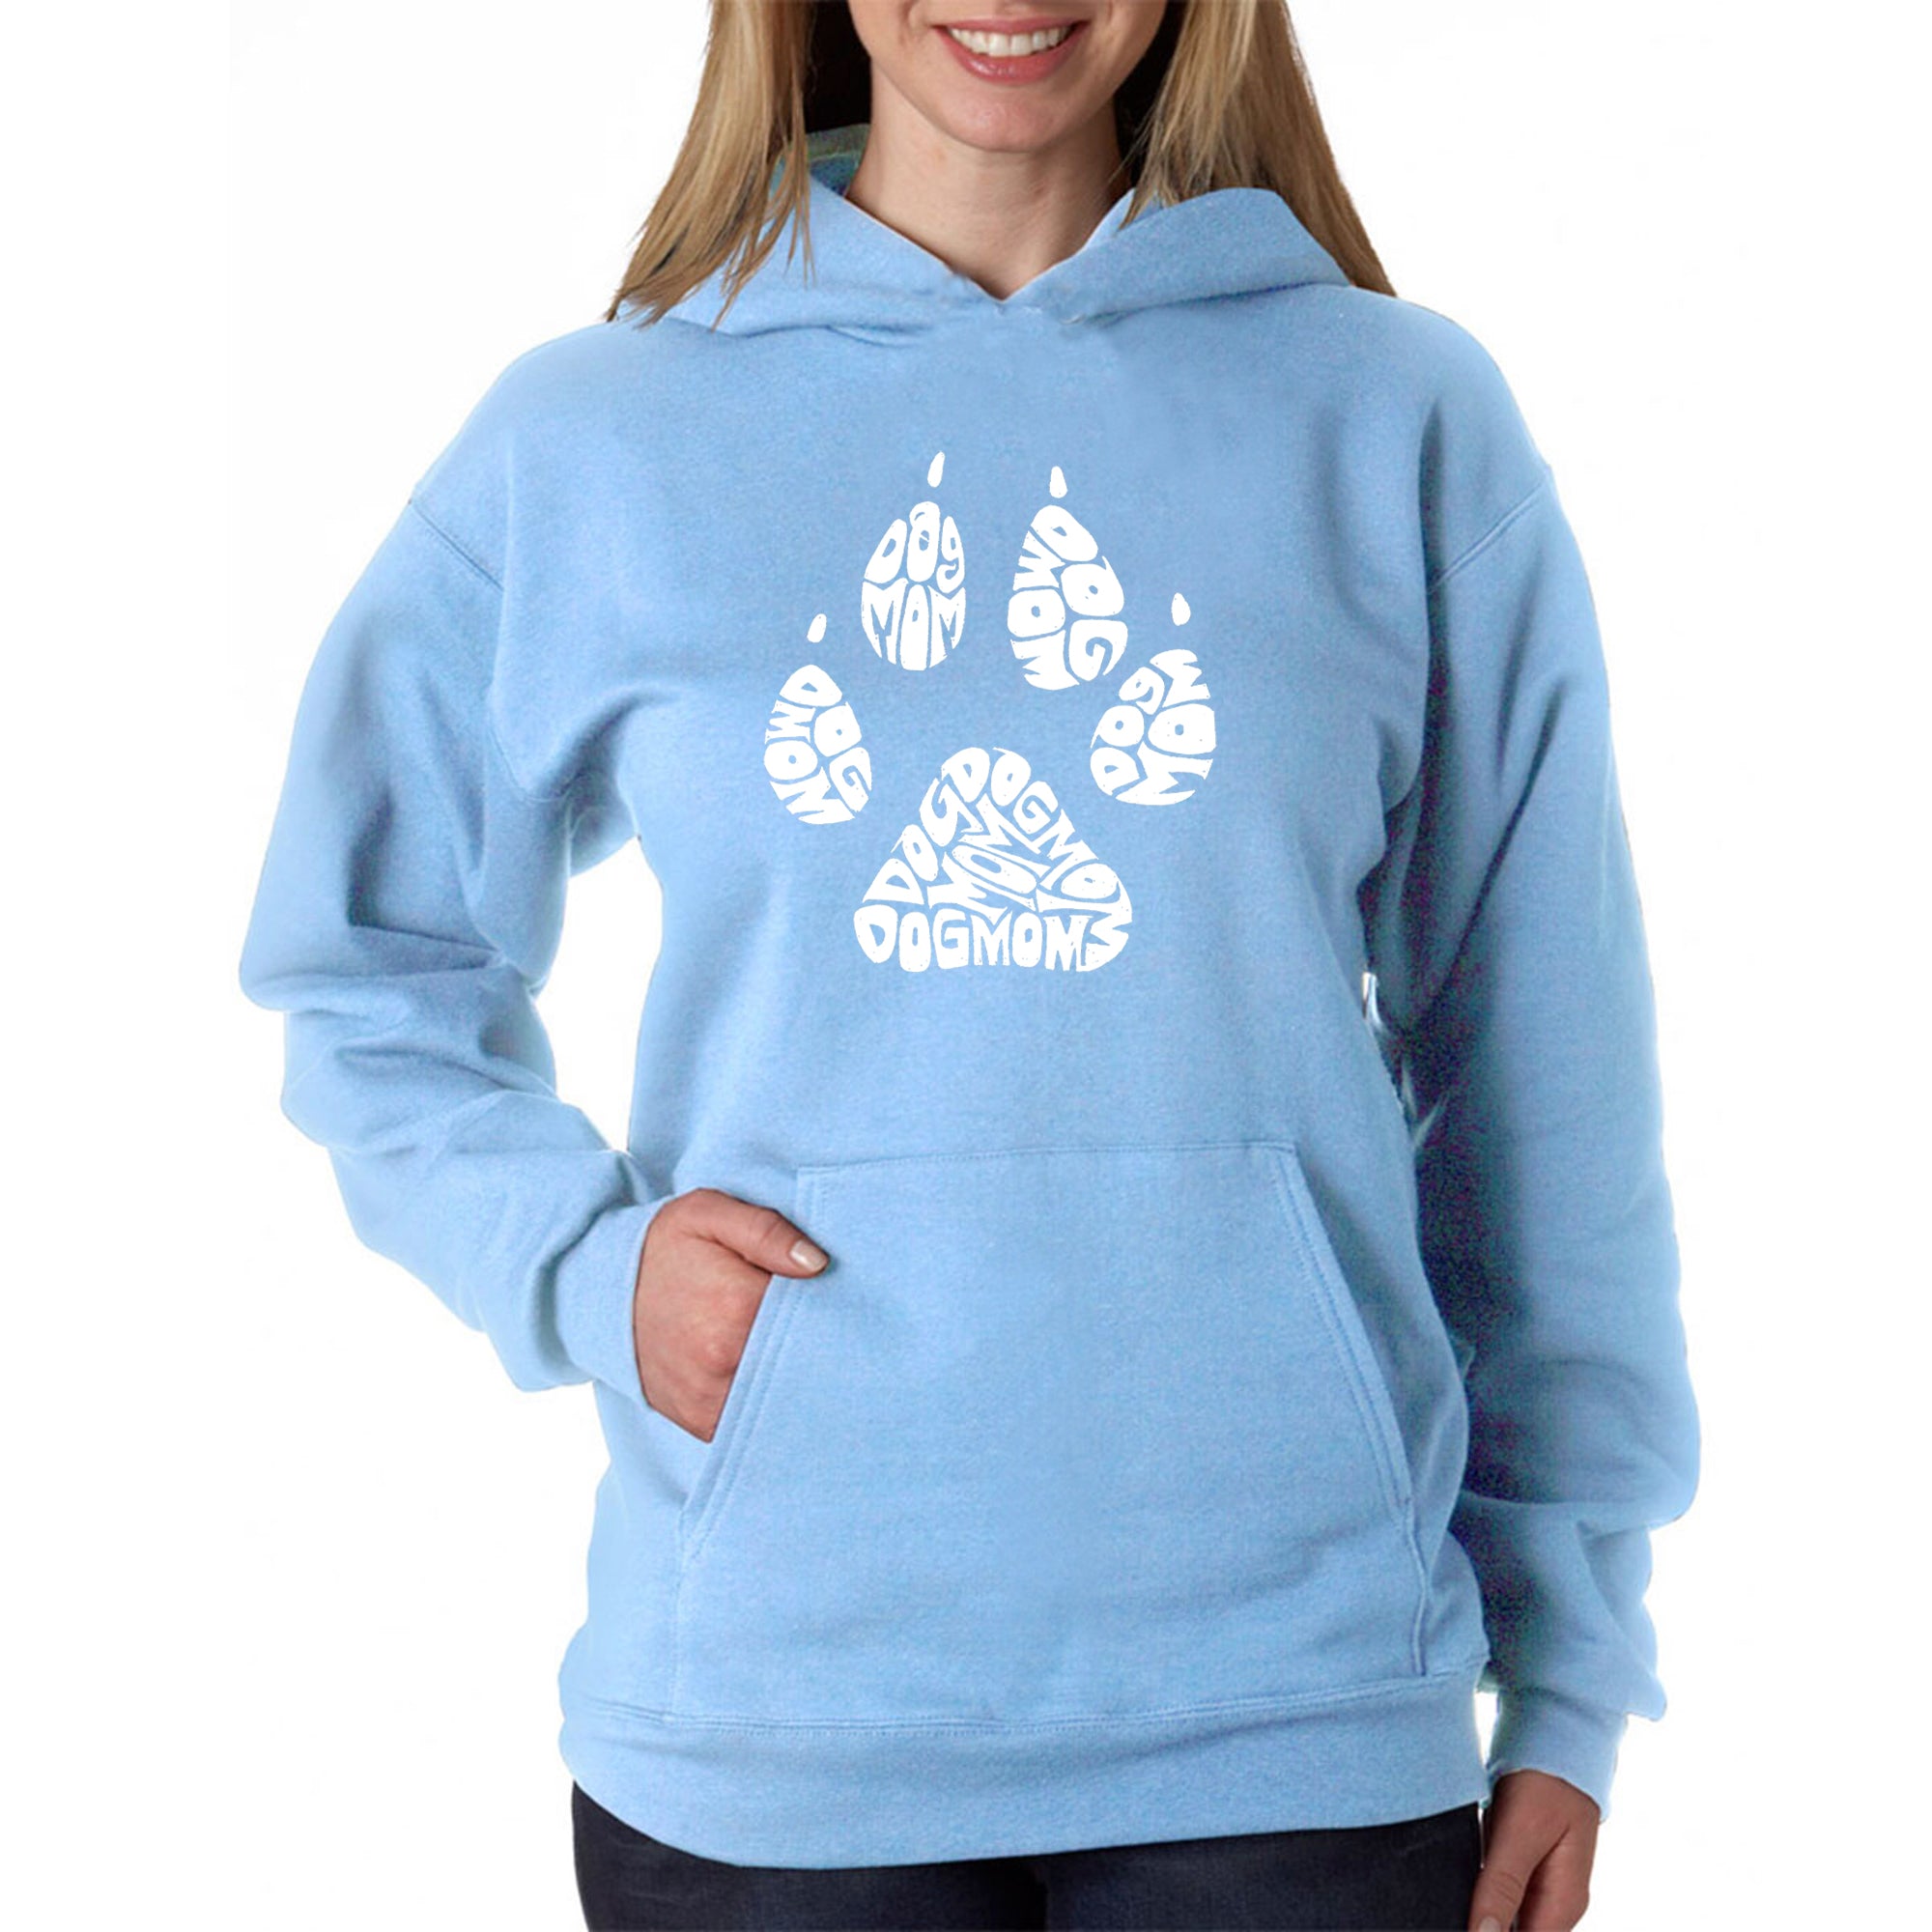 Dog Mom - Women's Word Art Hooded Sweatshirt - Blue - Small